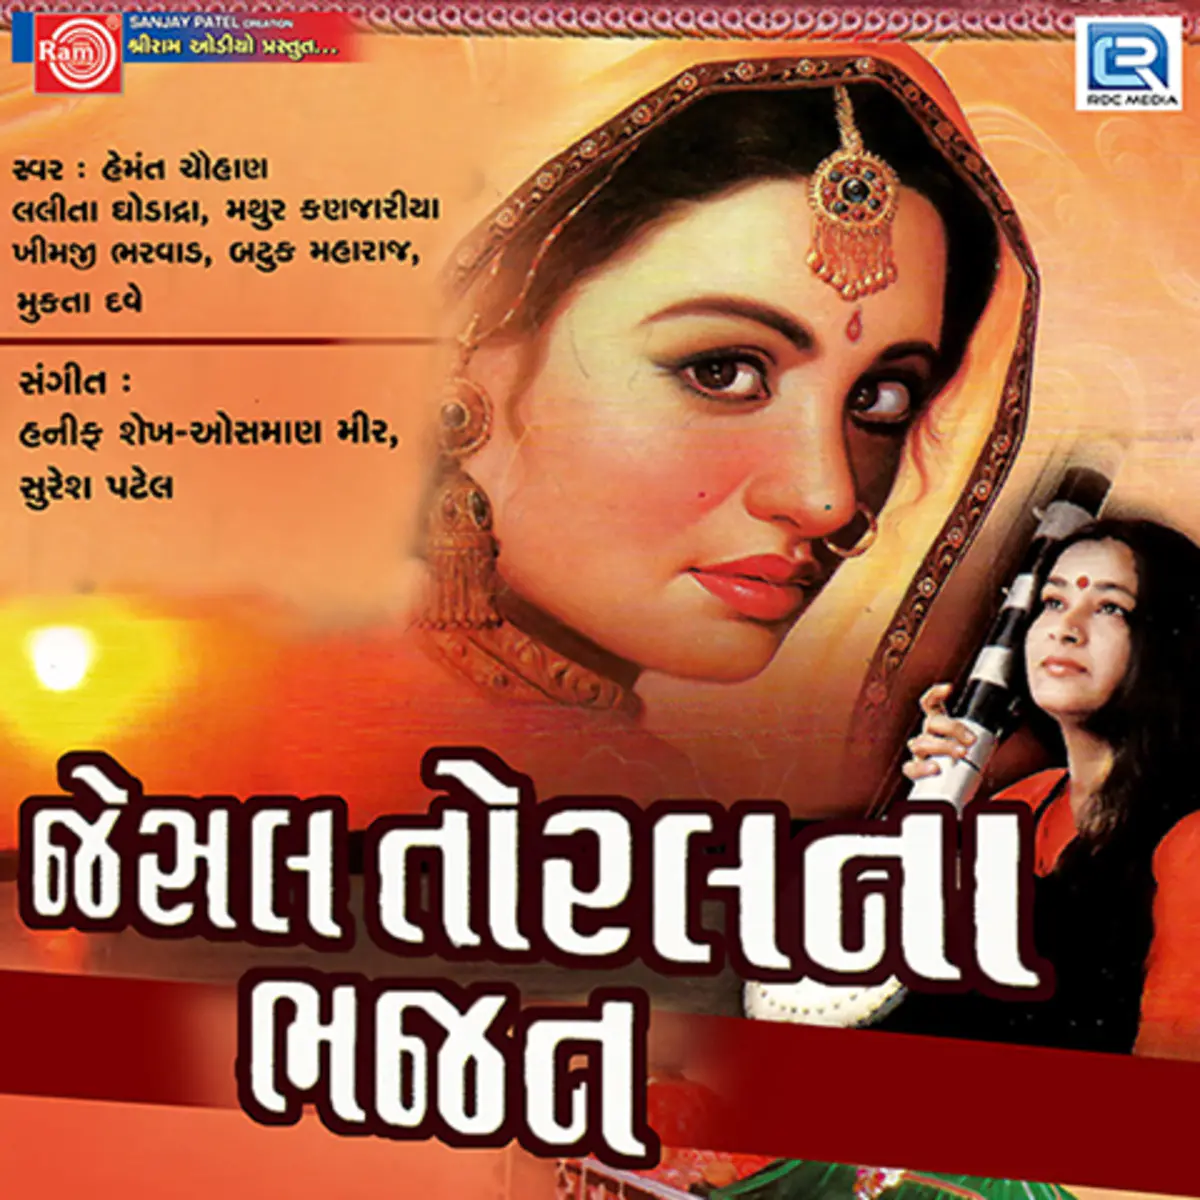 Jesal Toral Na Bhajan Songs Download Jesal Toral Na Bhajan Mp3 Gujarati Songs Online Free On Gaana Com Savajnu dan (best collection of esharadan gadhavi story & songs). jesal toral na bhajan songs download